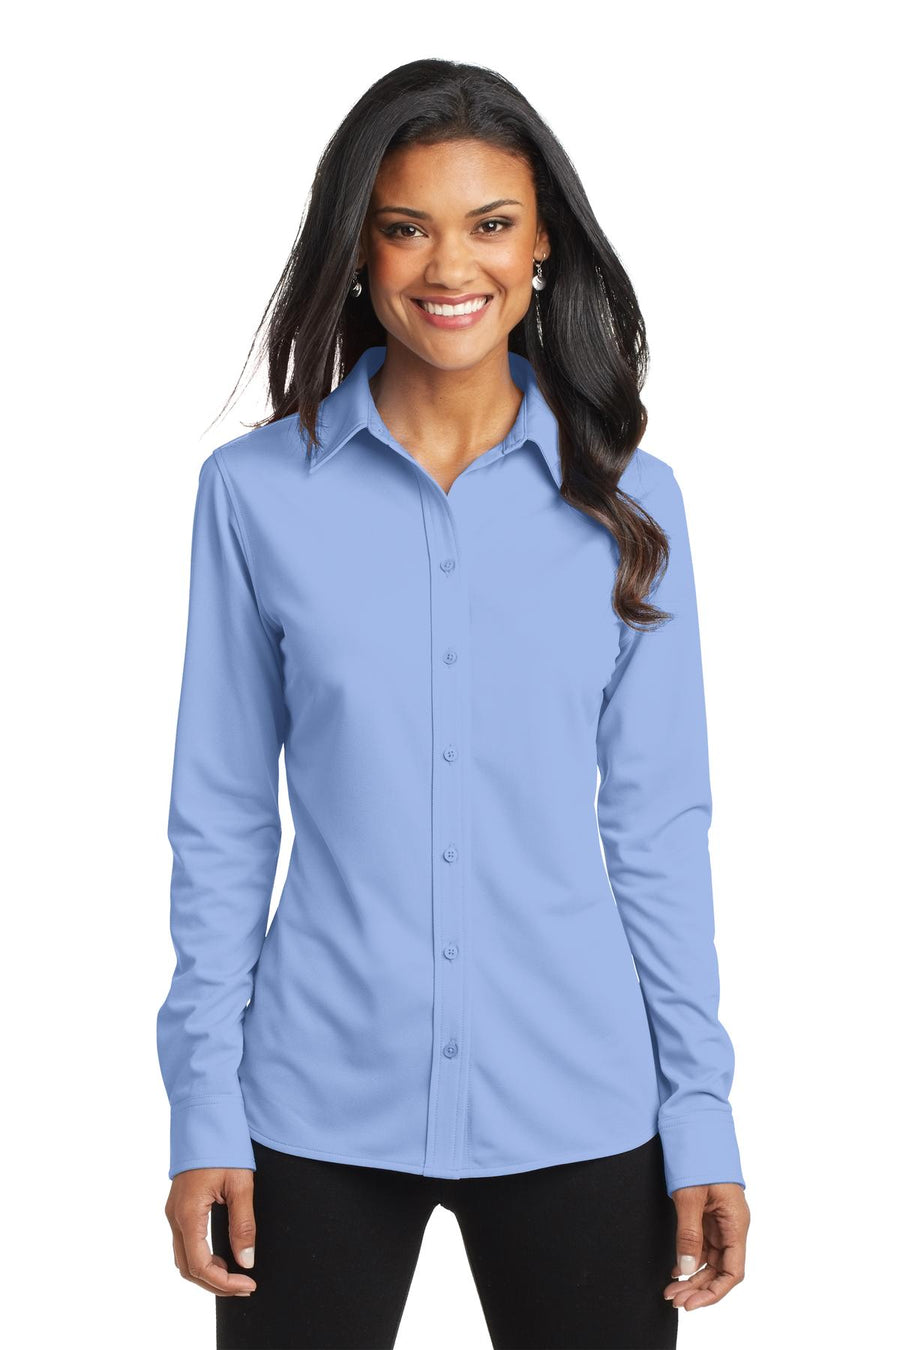 L570-Dress Shirt Blue-front_model